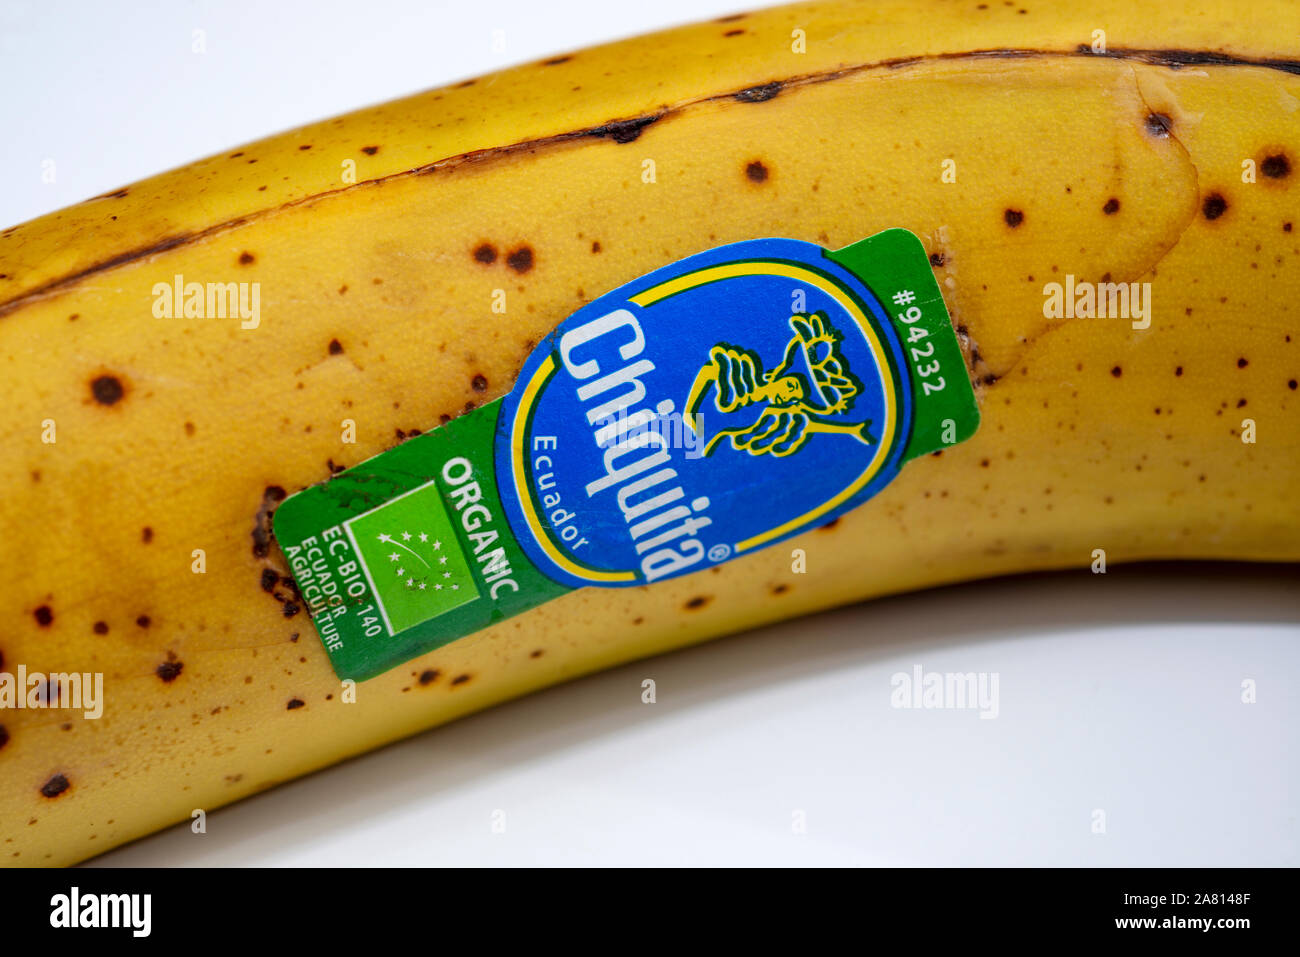 La Chiquita banane importate da Ecuador Foto Stock